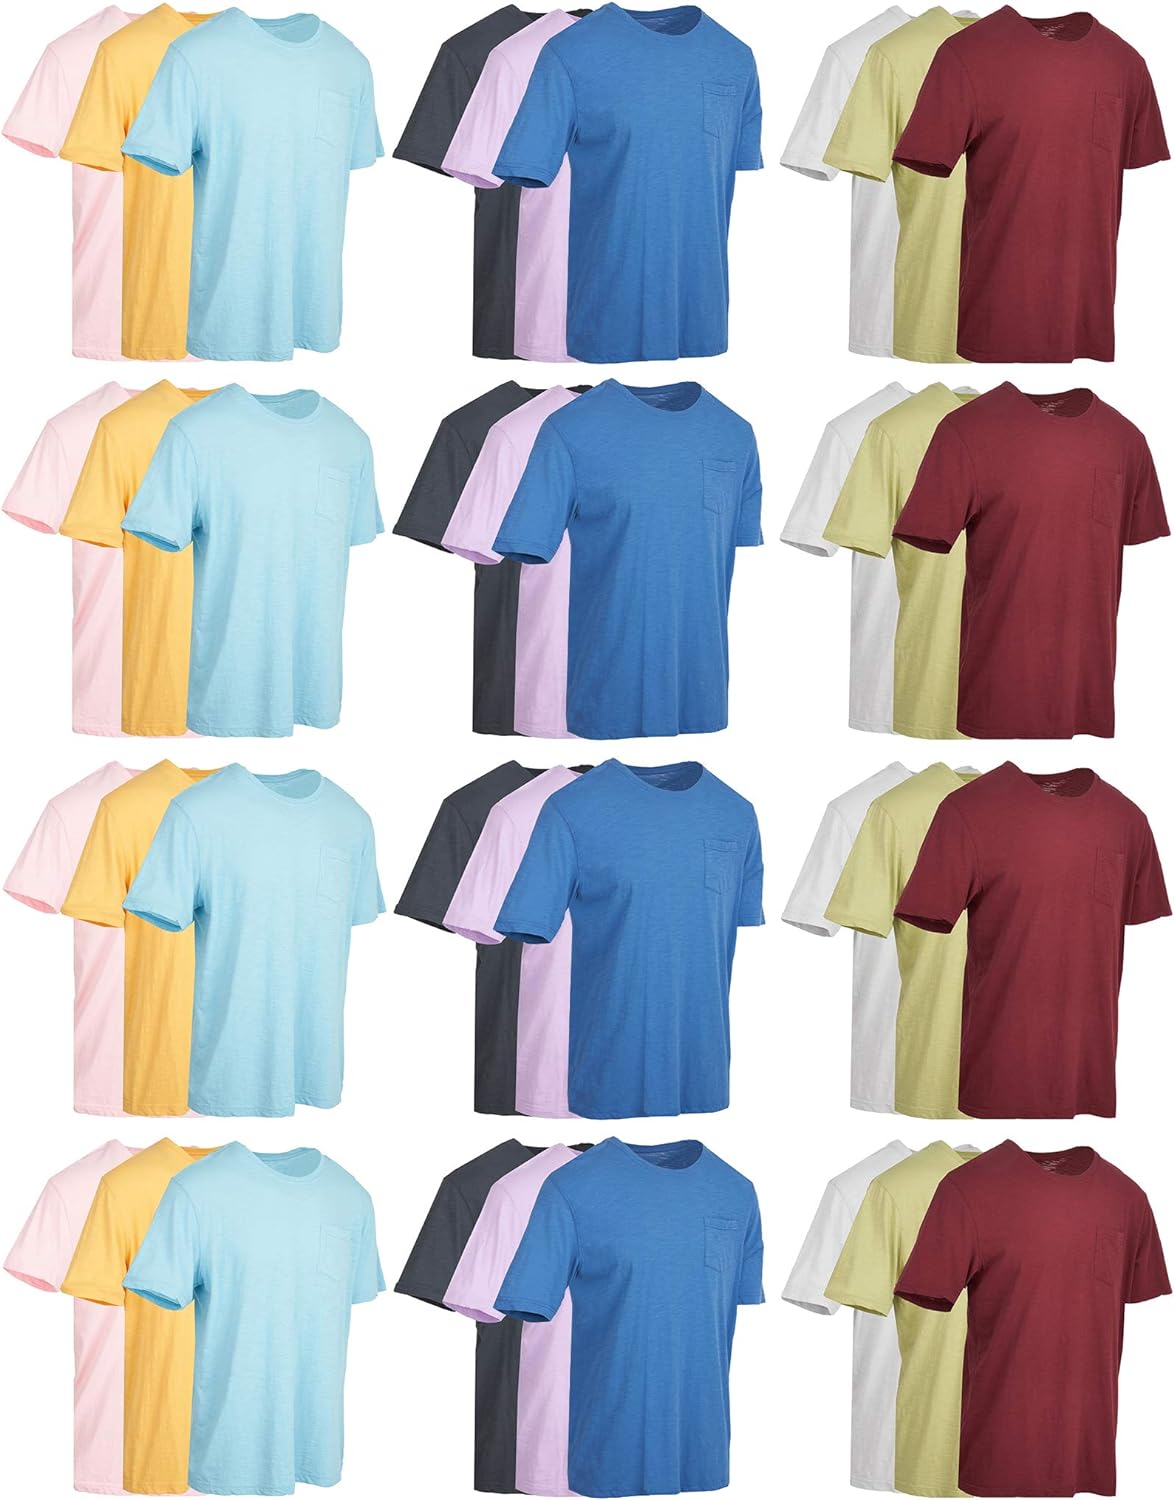 Yacht & Smith 36 Pack of Mens Cotton Slub Pocket Tees Tshirt, T-Shirts in Bulk Wholesale, Colorful Packs (Small)